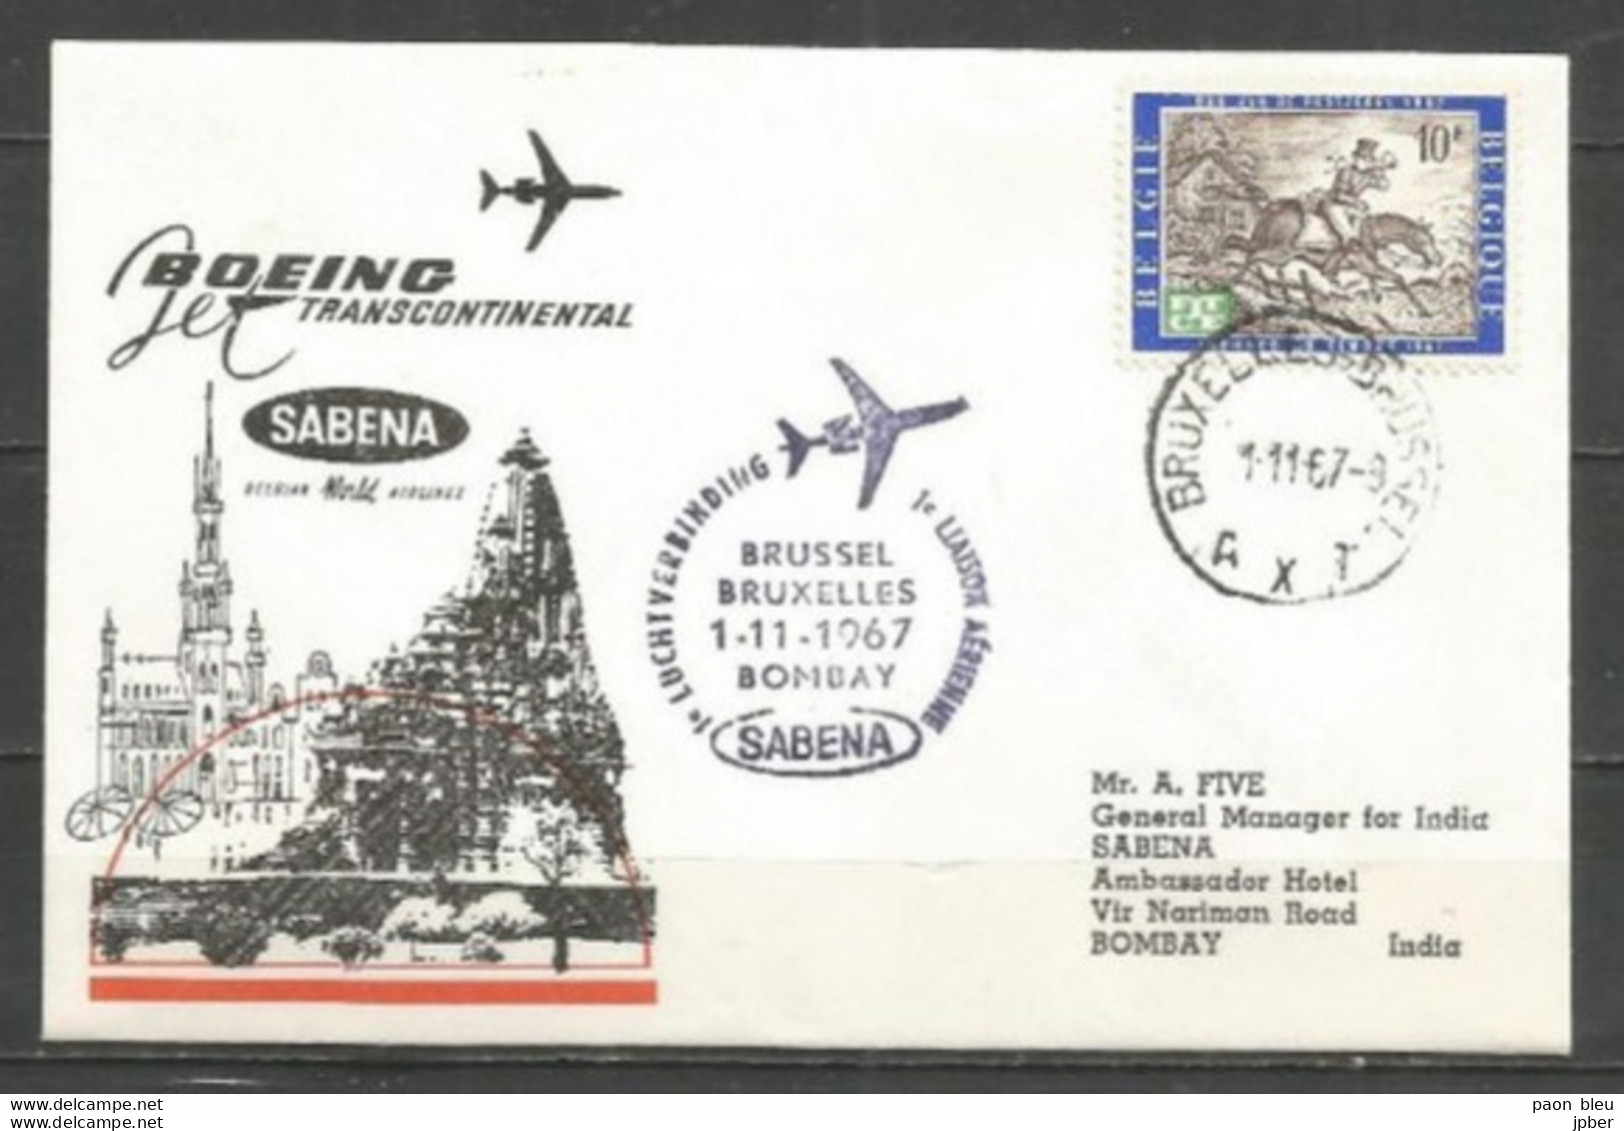 BRUXELLES-BOMBAY 1-11-1967 - Sabena Boeing - Timbres Belgique Postillon - Airplanes